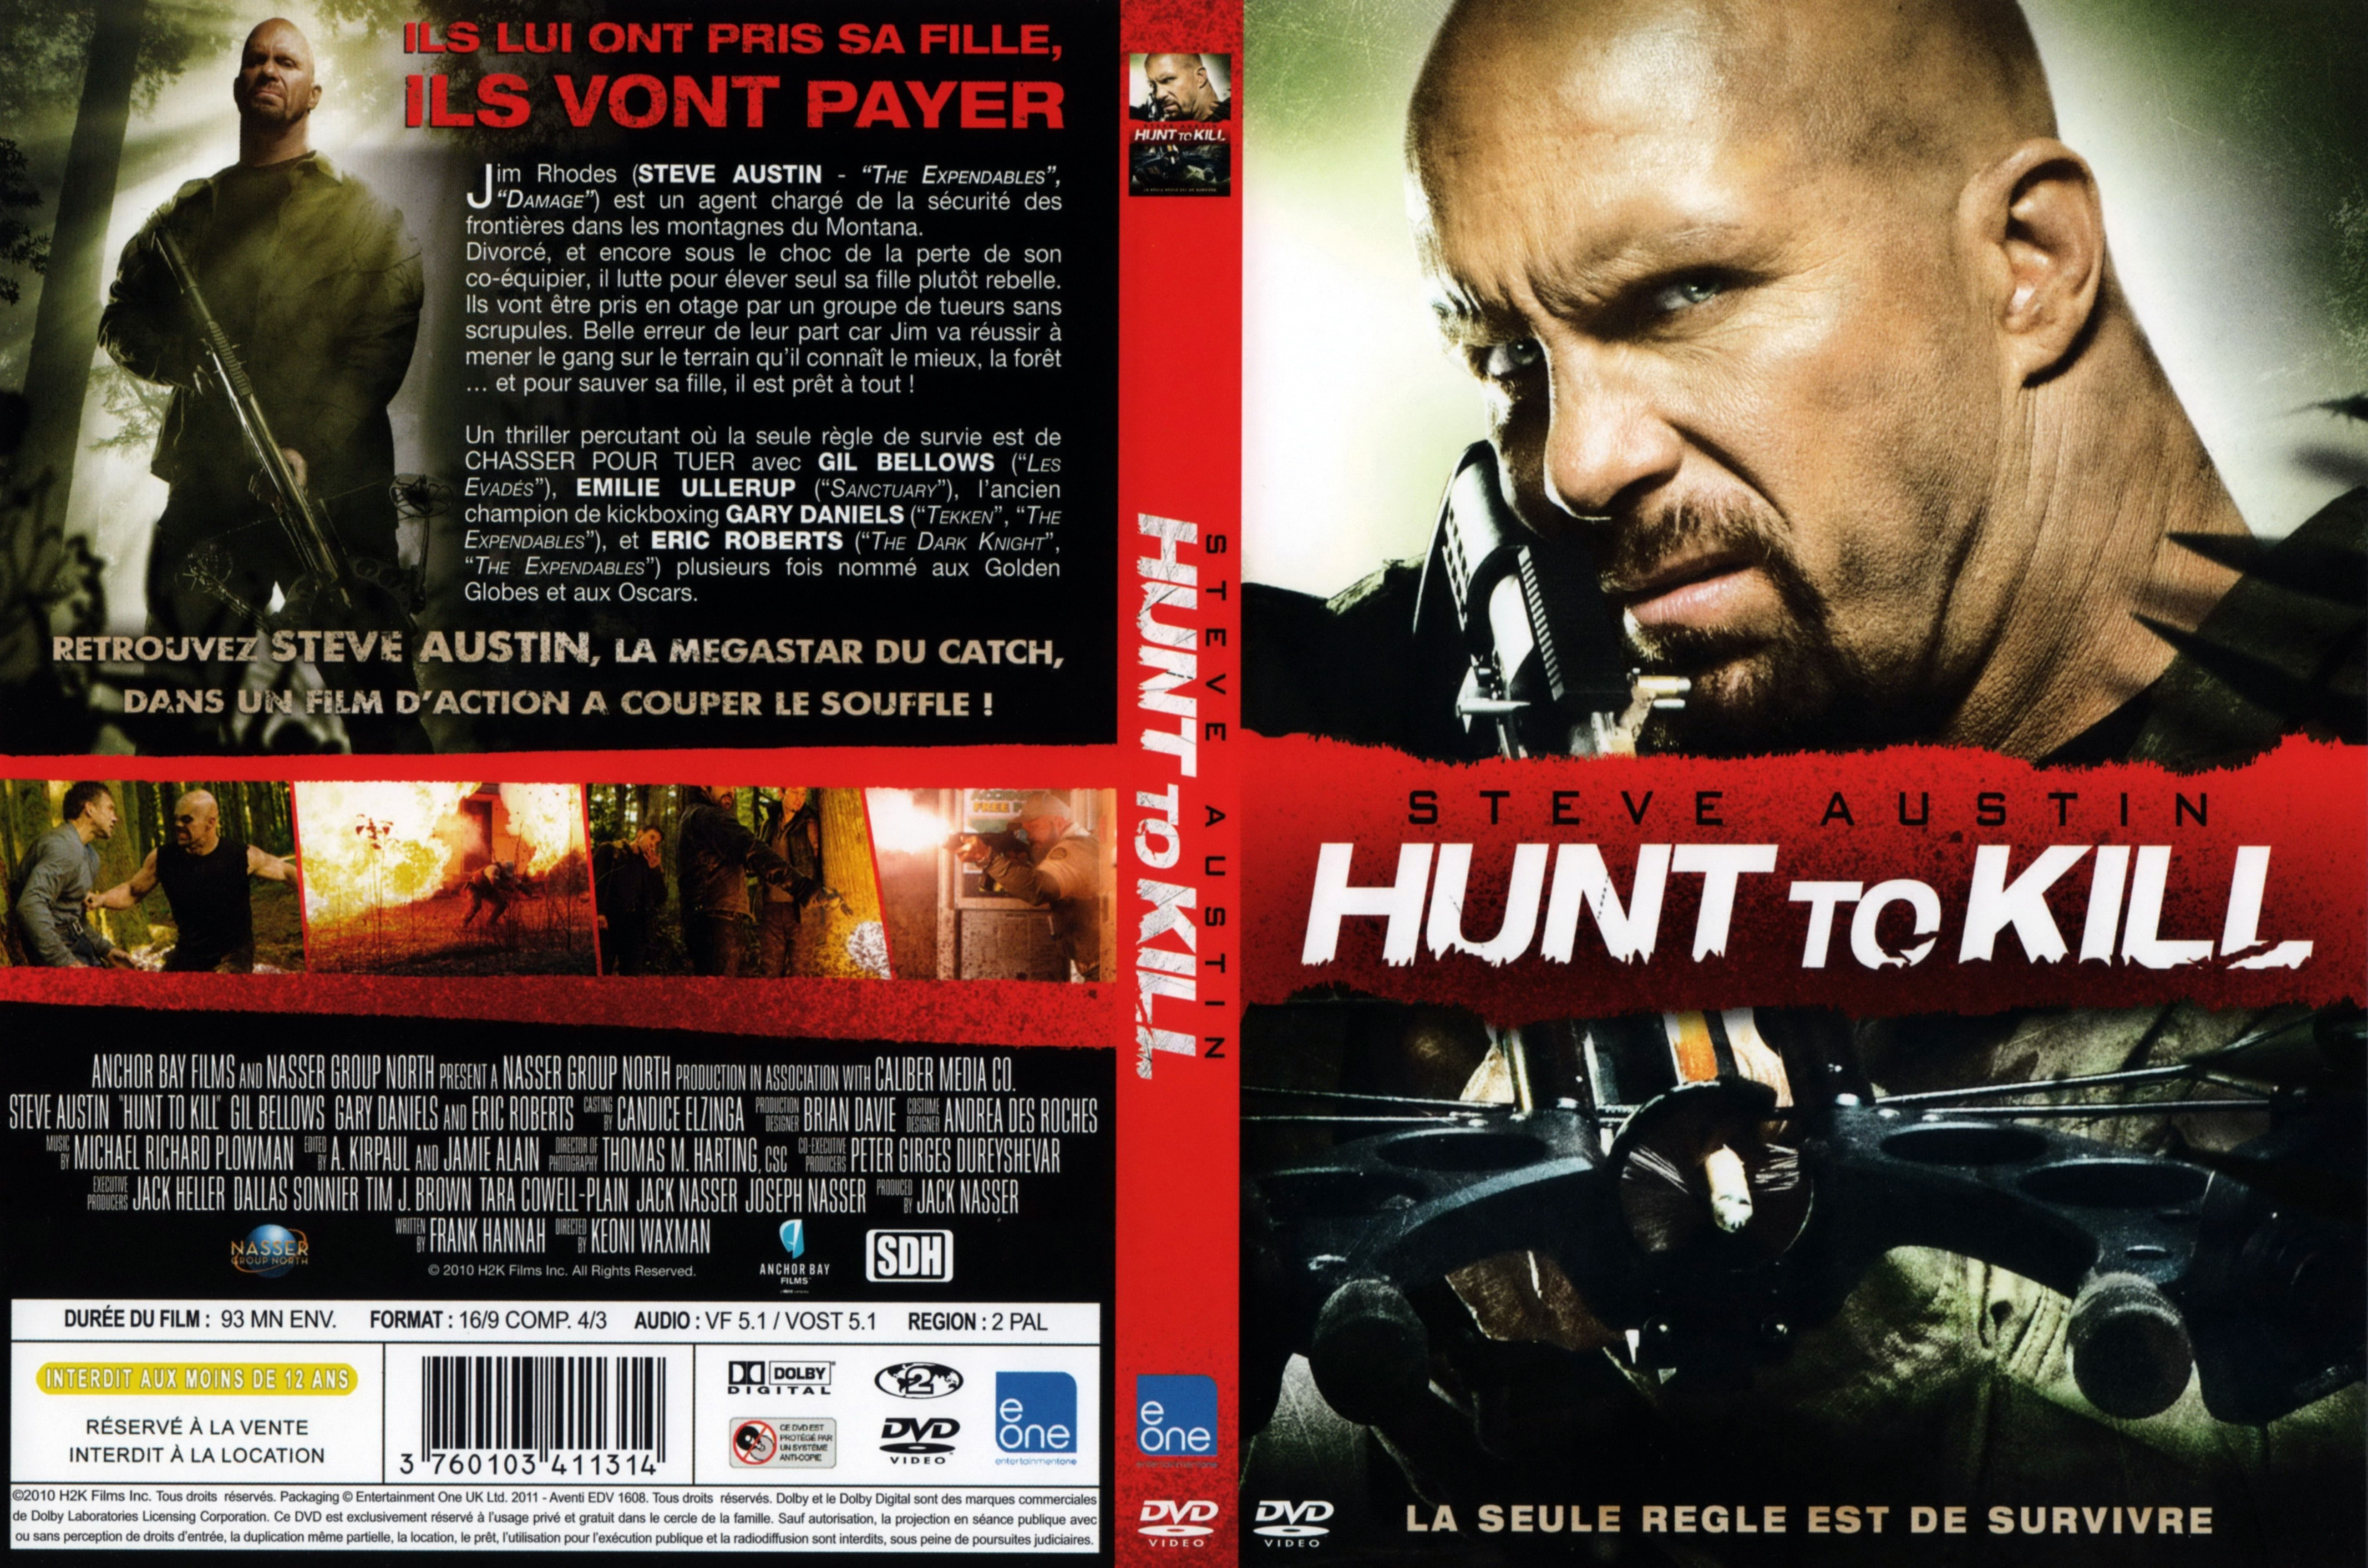 Jaquette DVD Hunt to kill